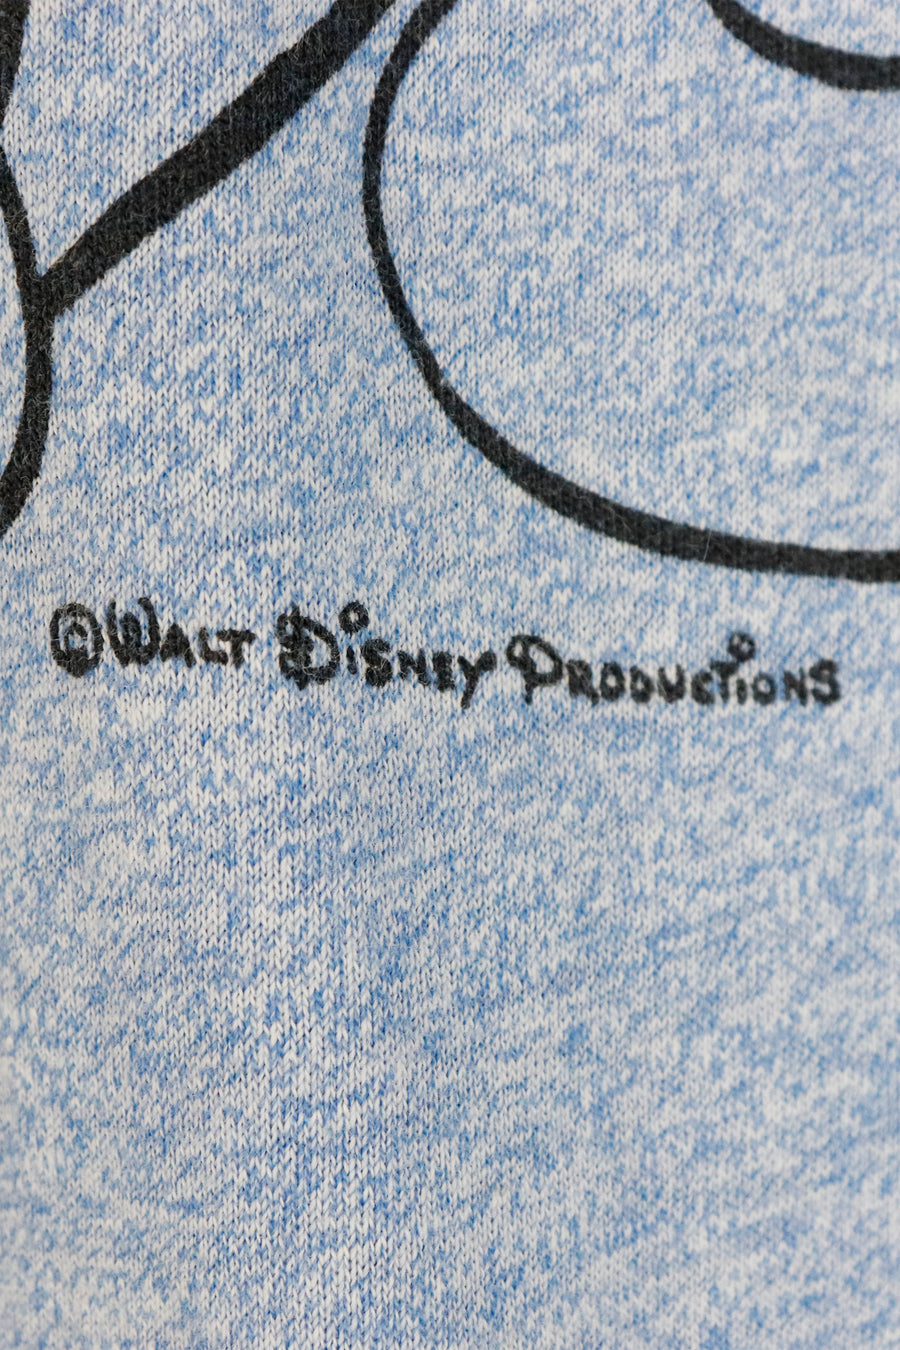 Vintage Disney Mikey Mouse Hollow Vinyl Print T Shirt Sz S